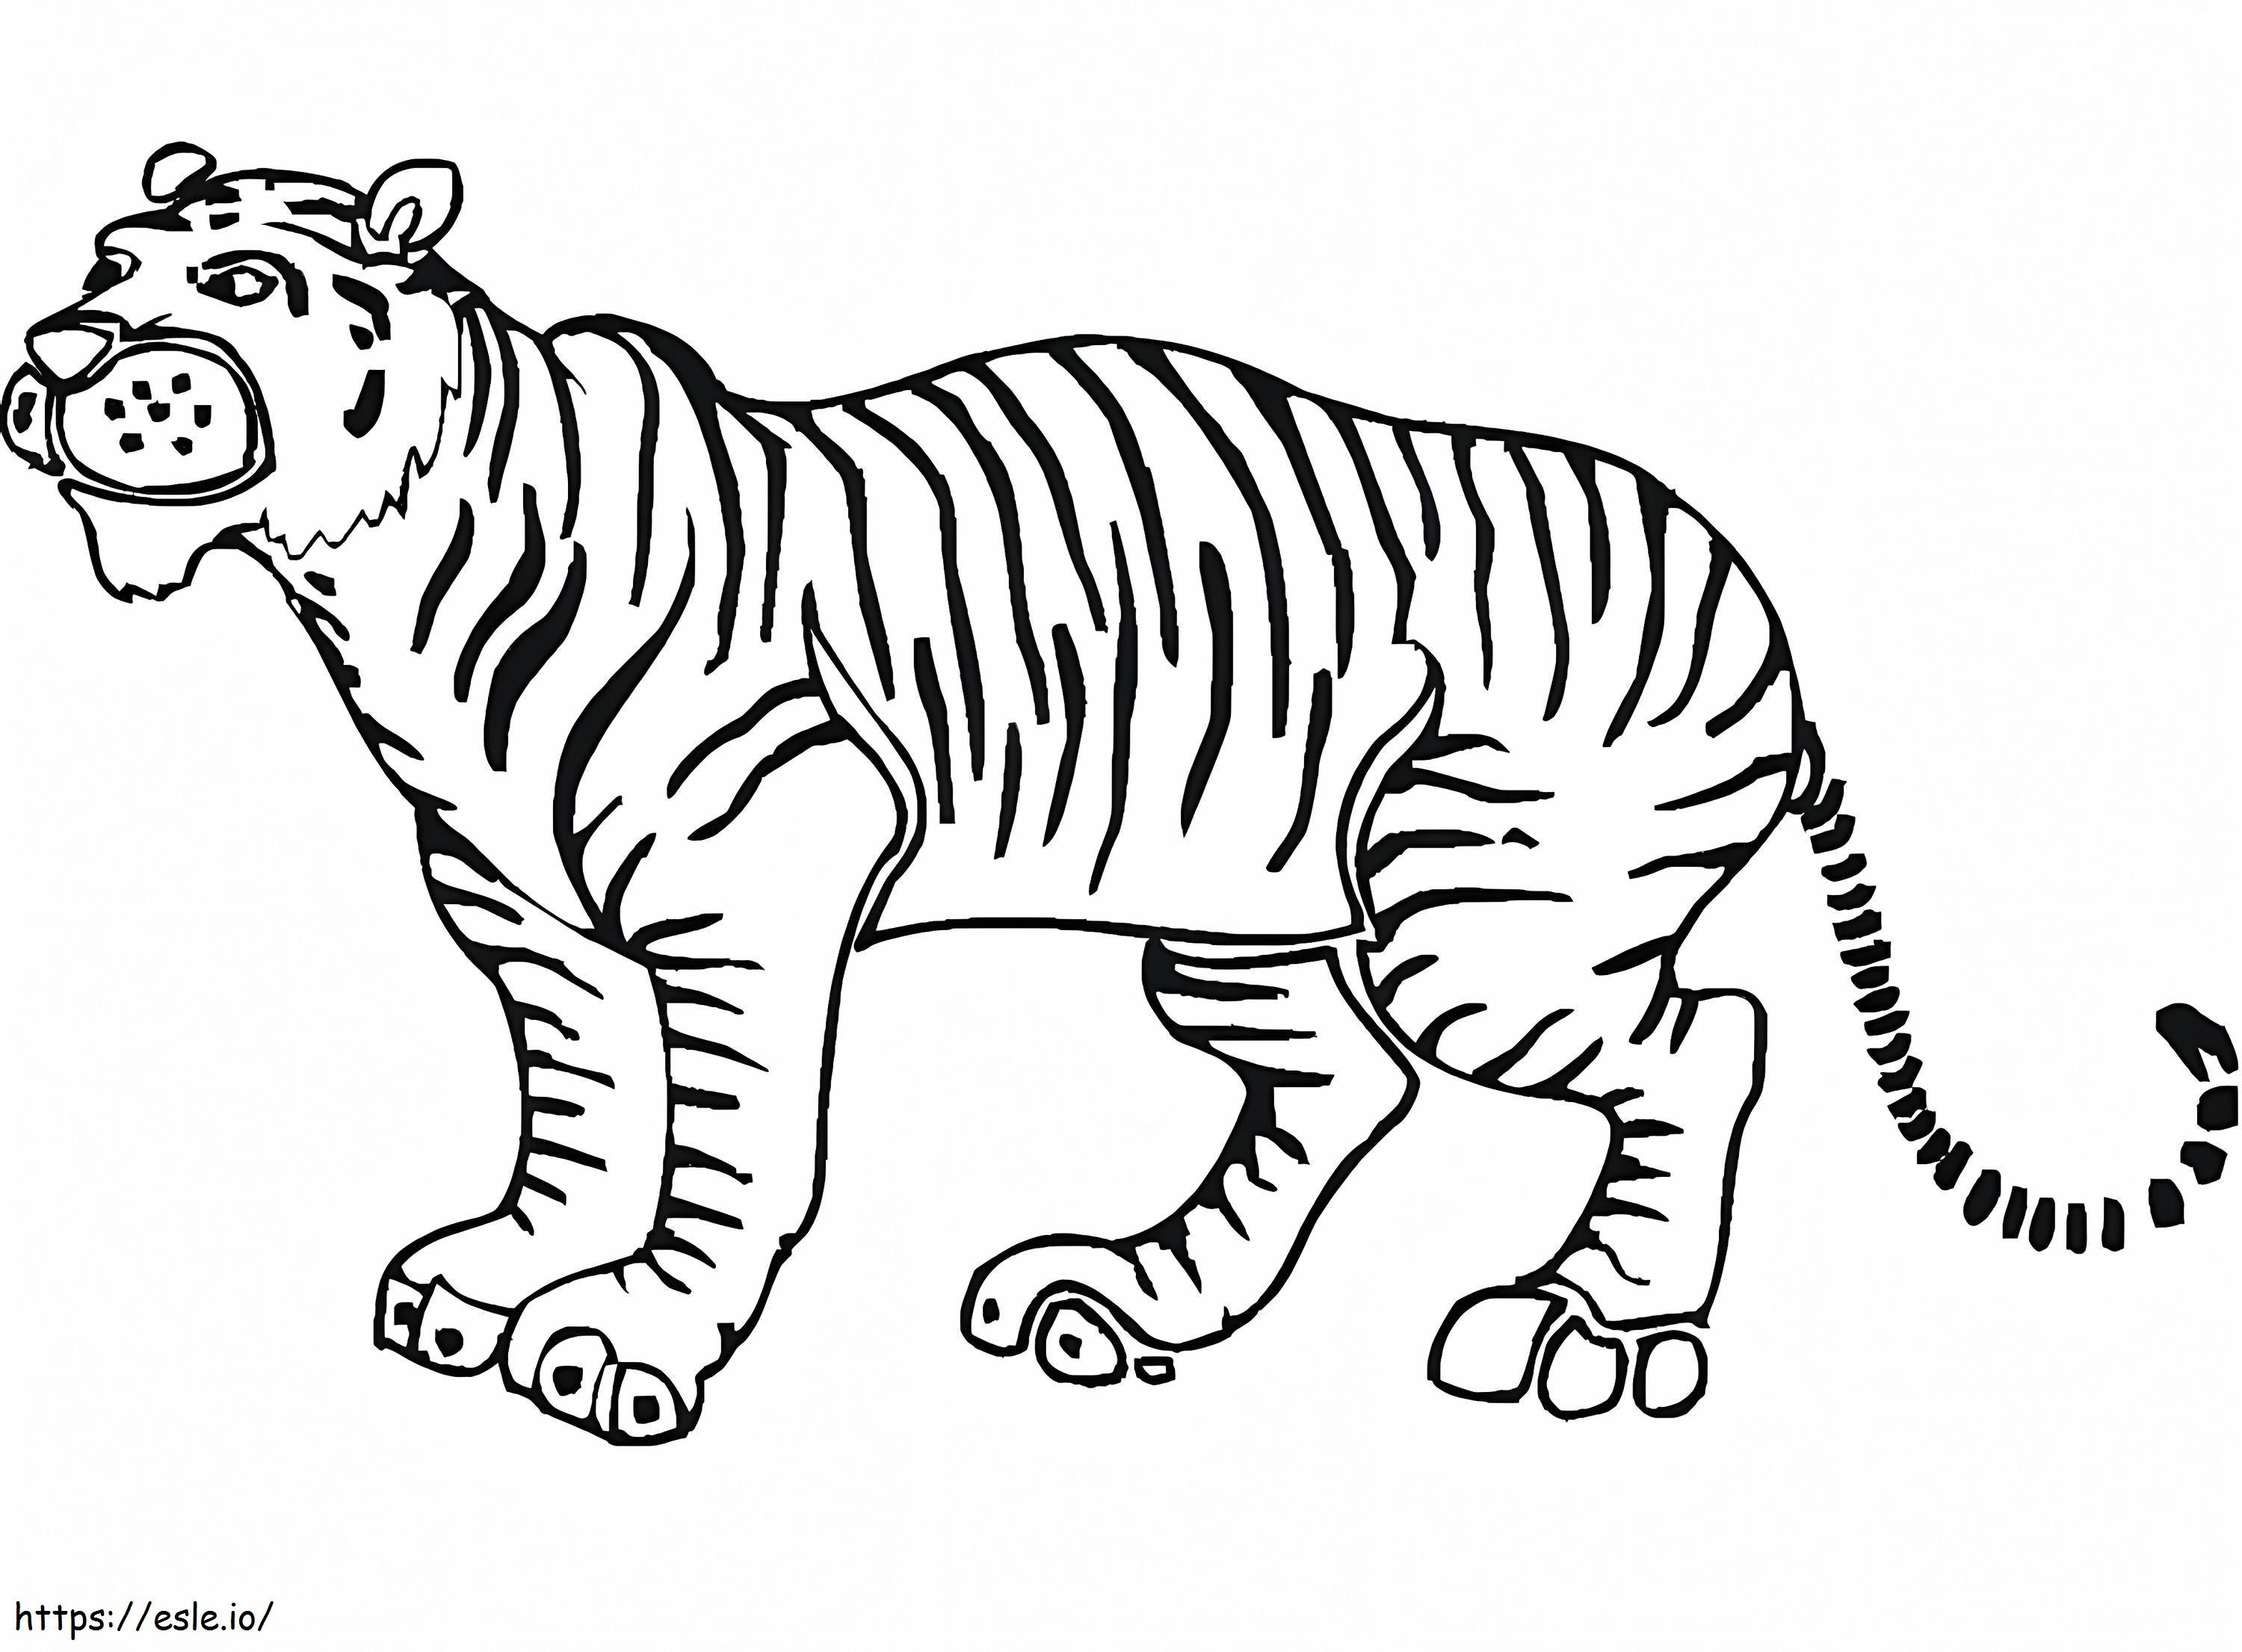 Un tigre para colorear